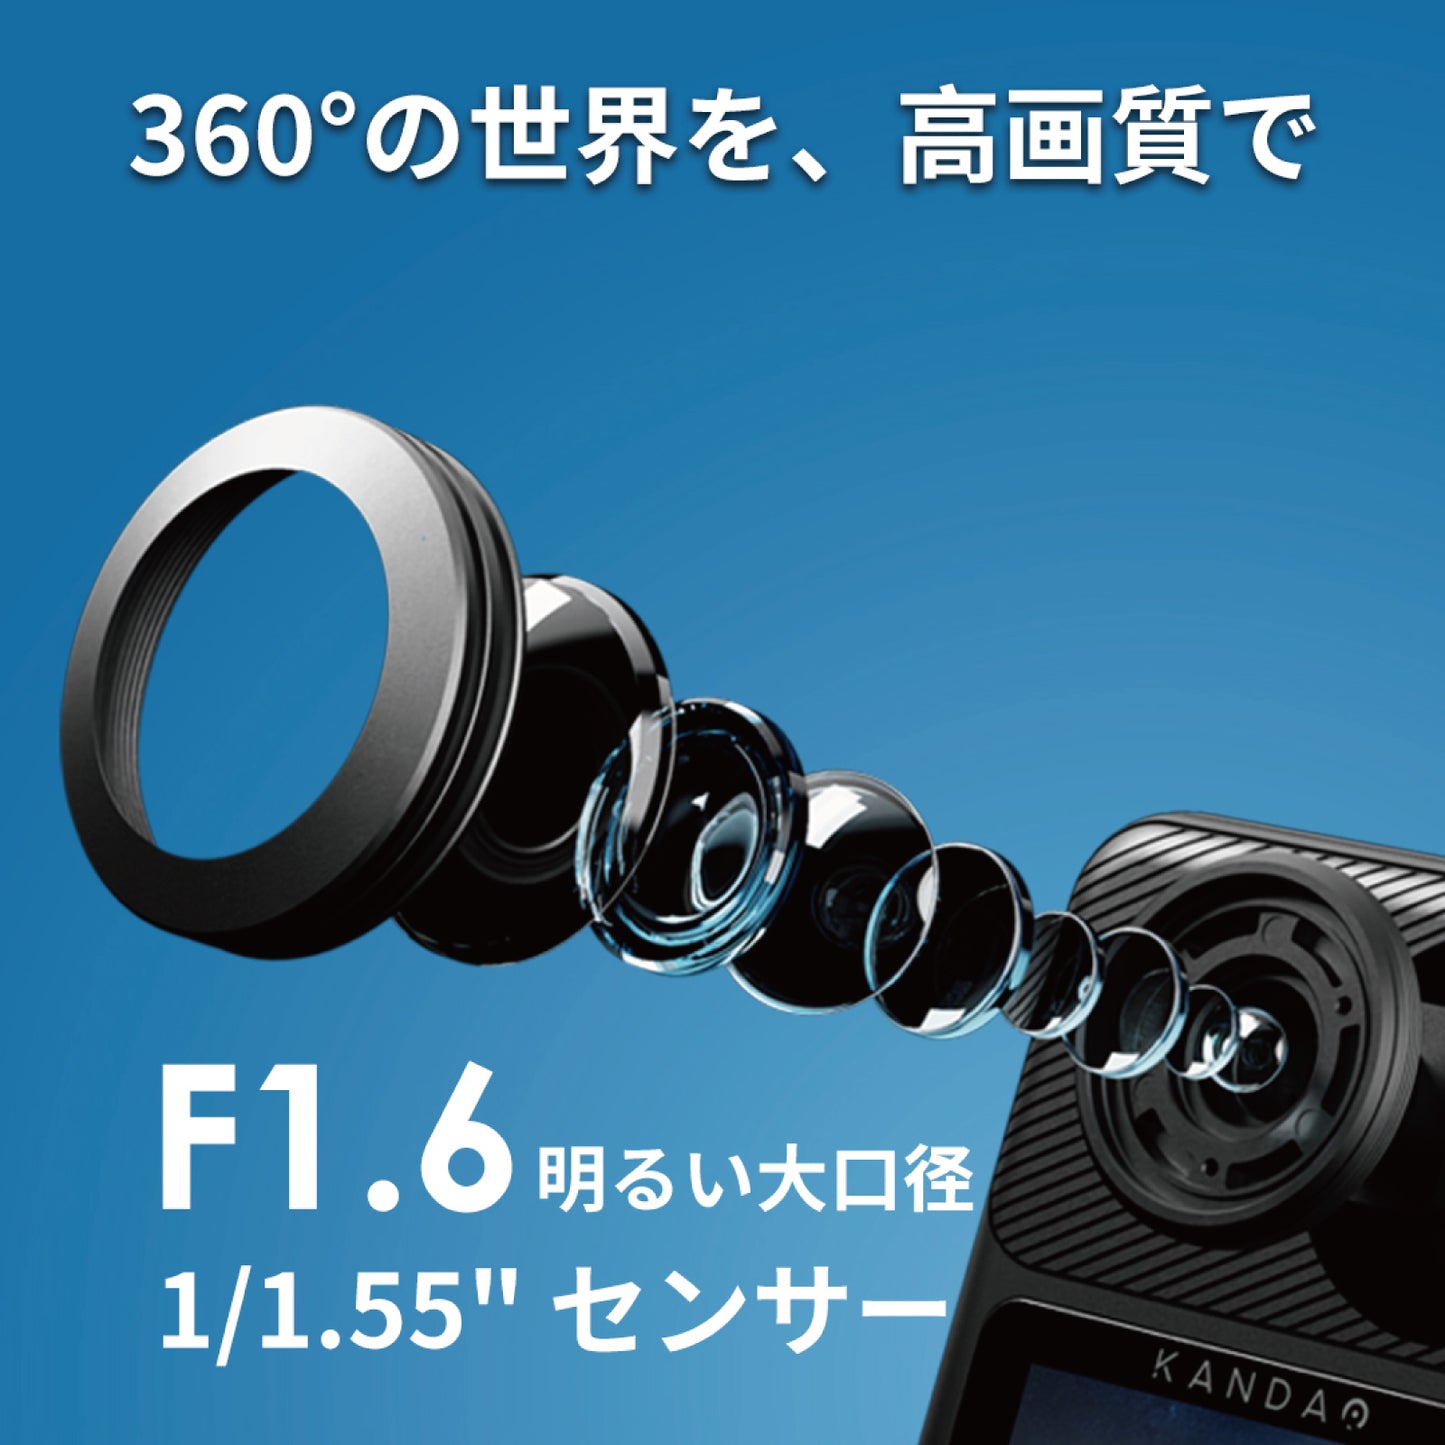 Kandao QooCam3 / 360度 アクションカメラ クーカム3 5.7K 7200万画素 360度パノラマ撮影 360度パノラマ映像